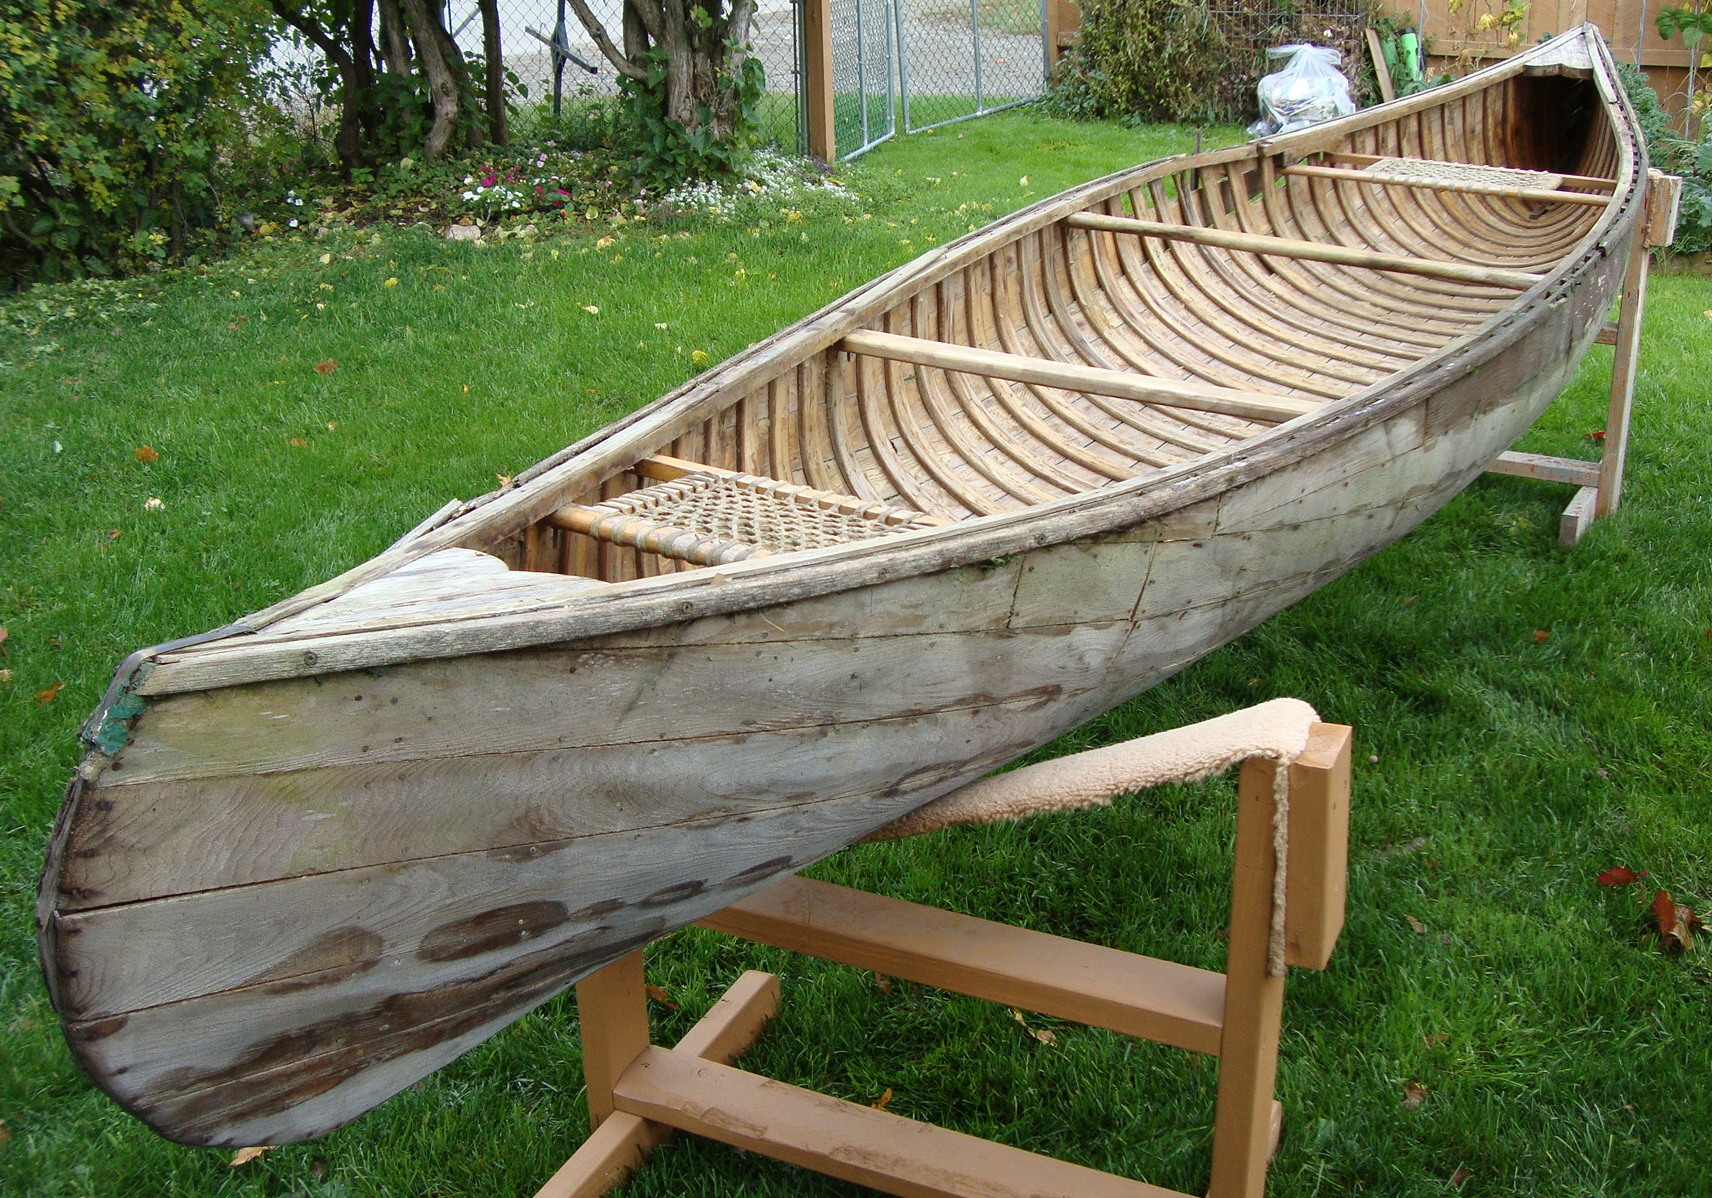 Wood-Canvas Canoes – General | Canoeguy's Blog